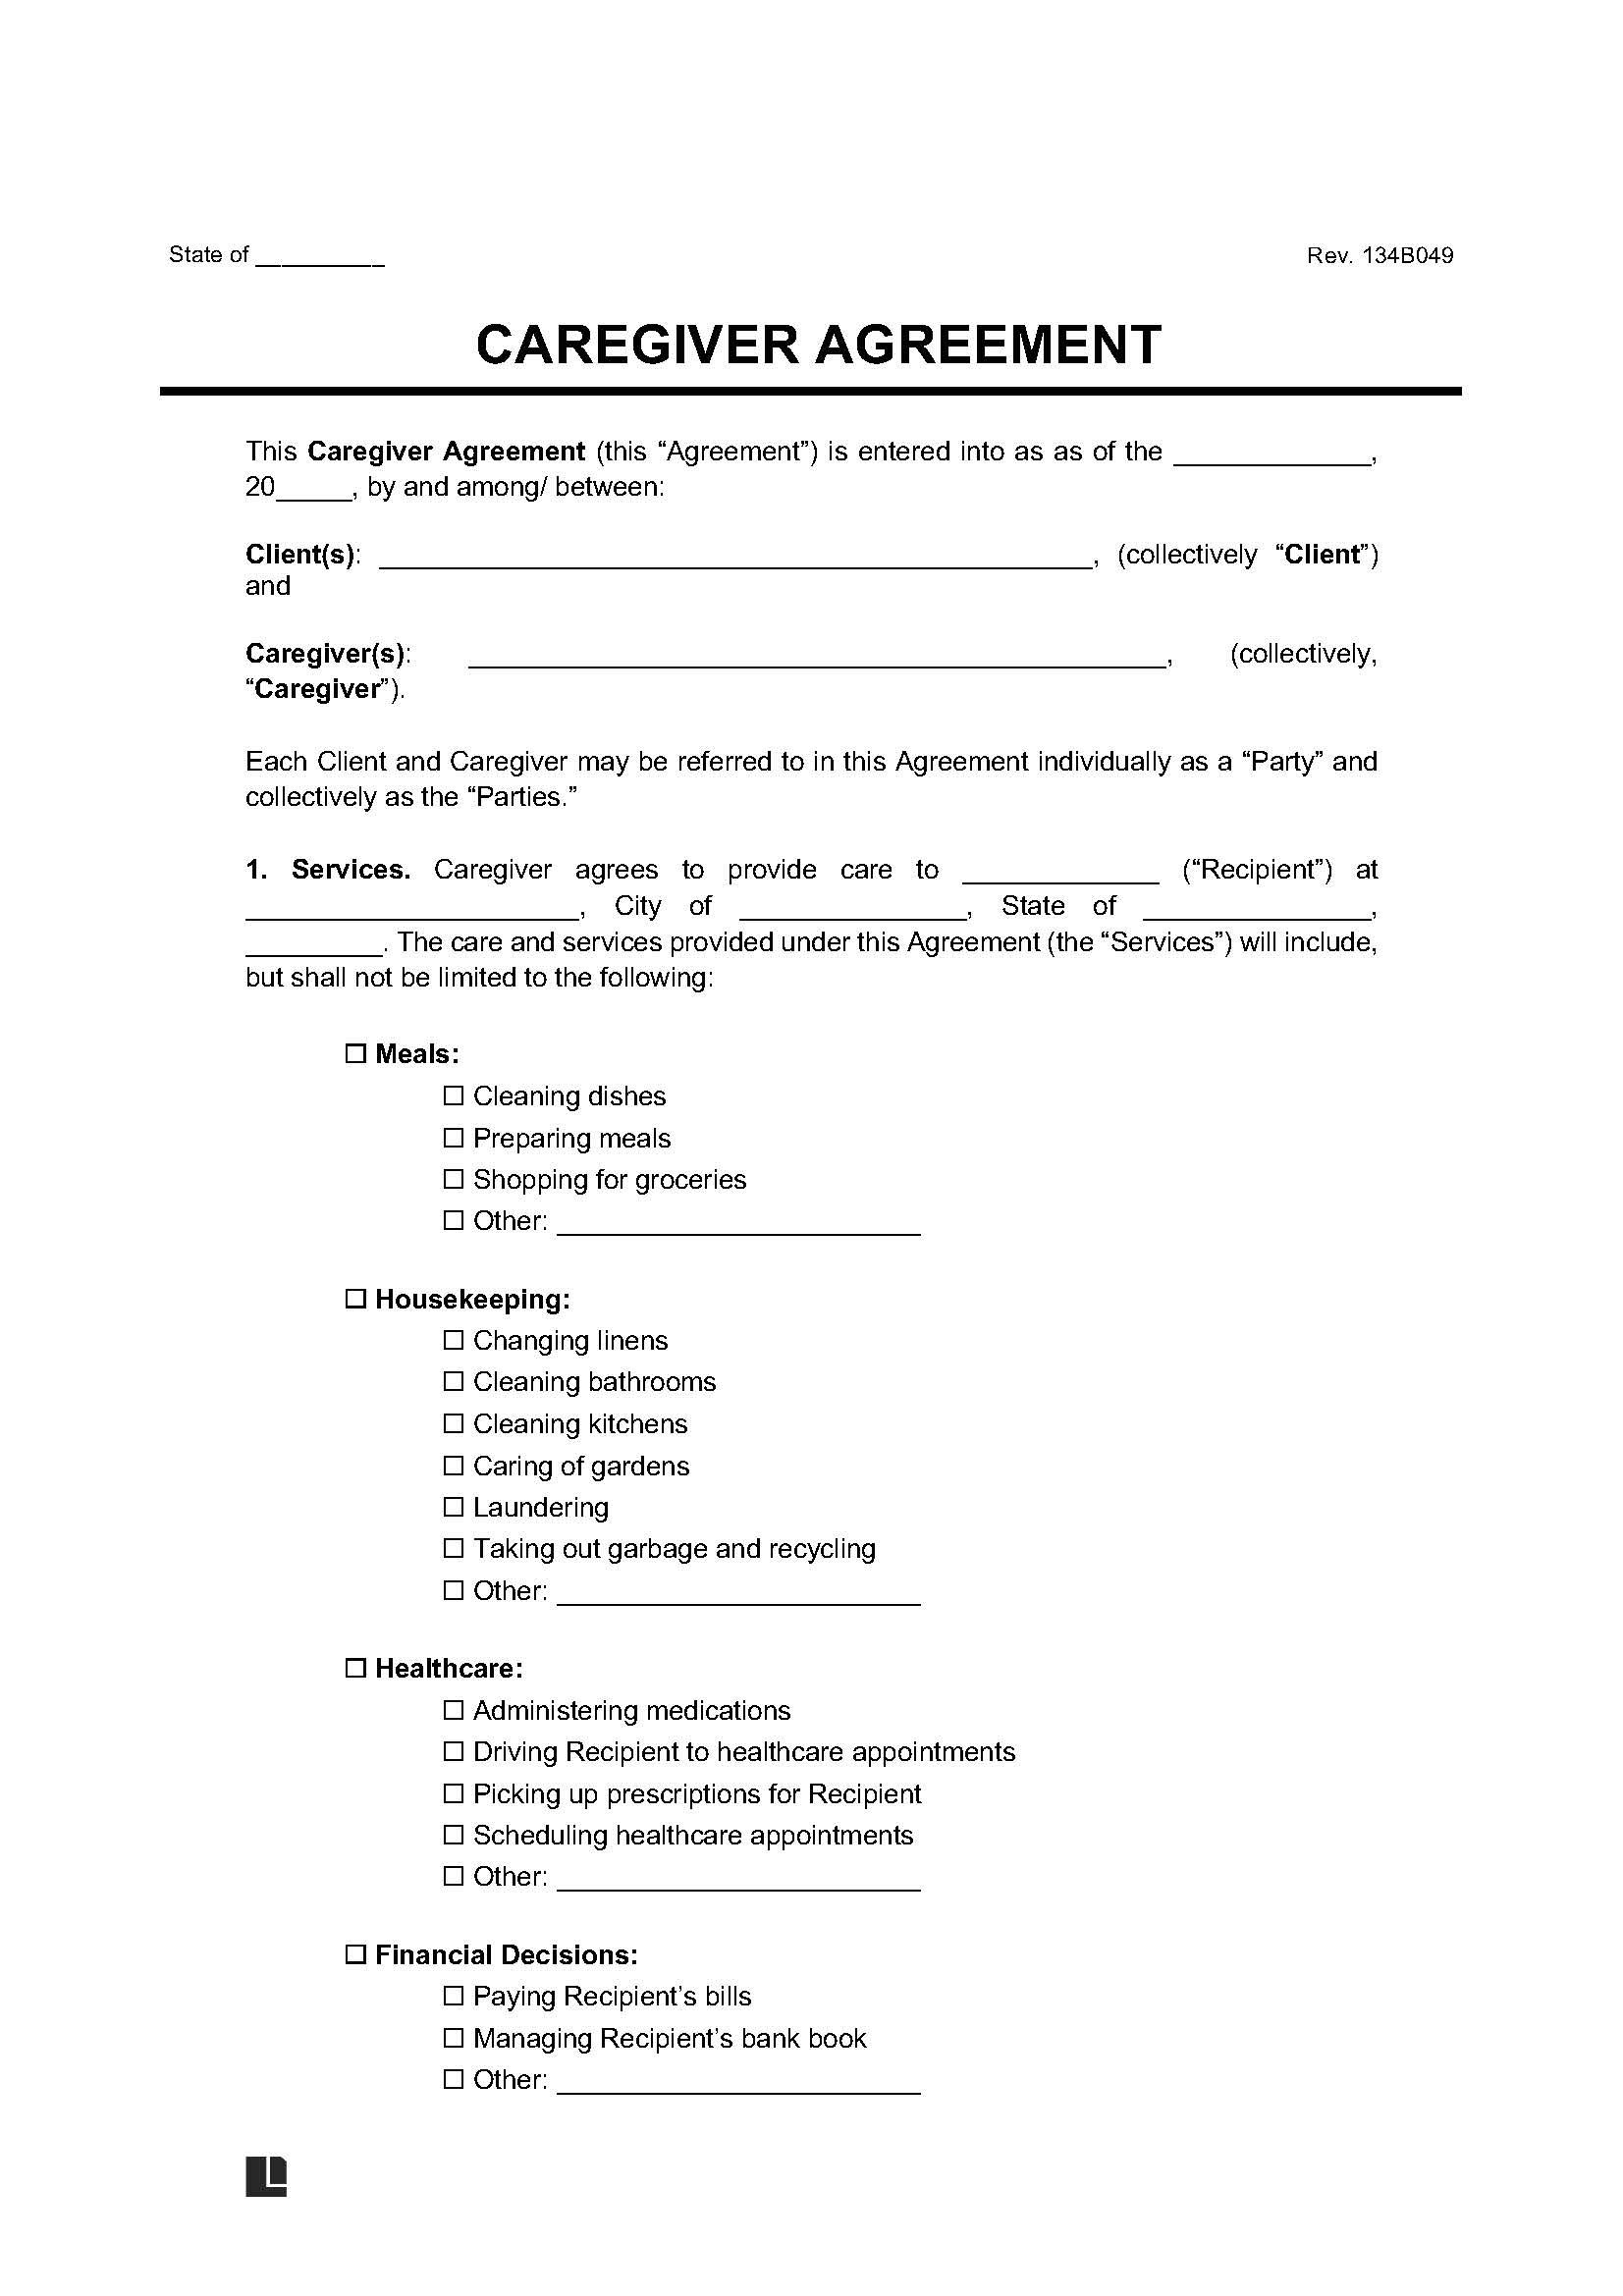 Caregiver Agreement screenshot